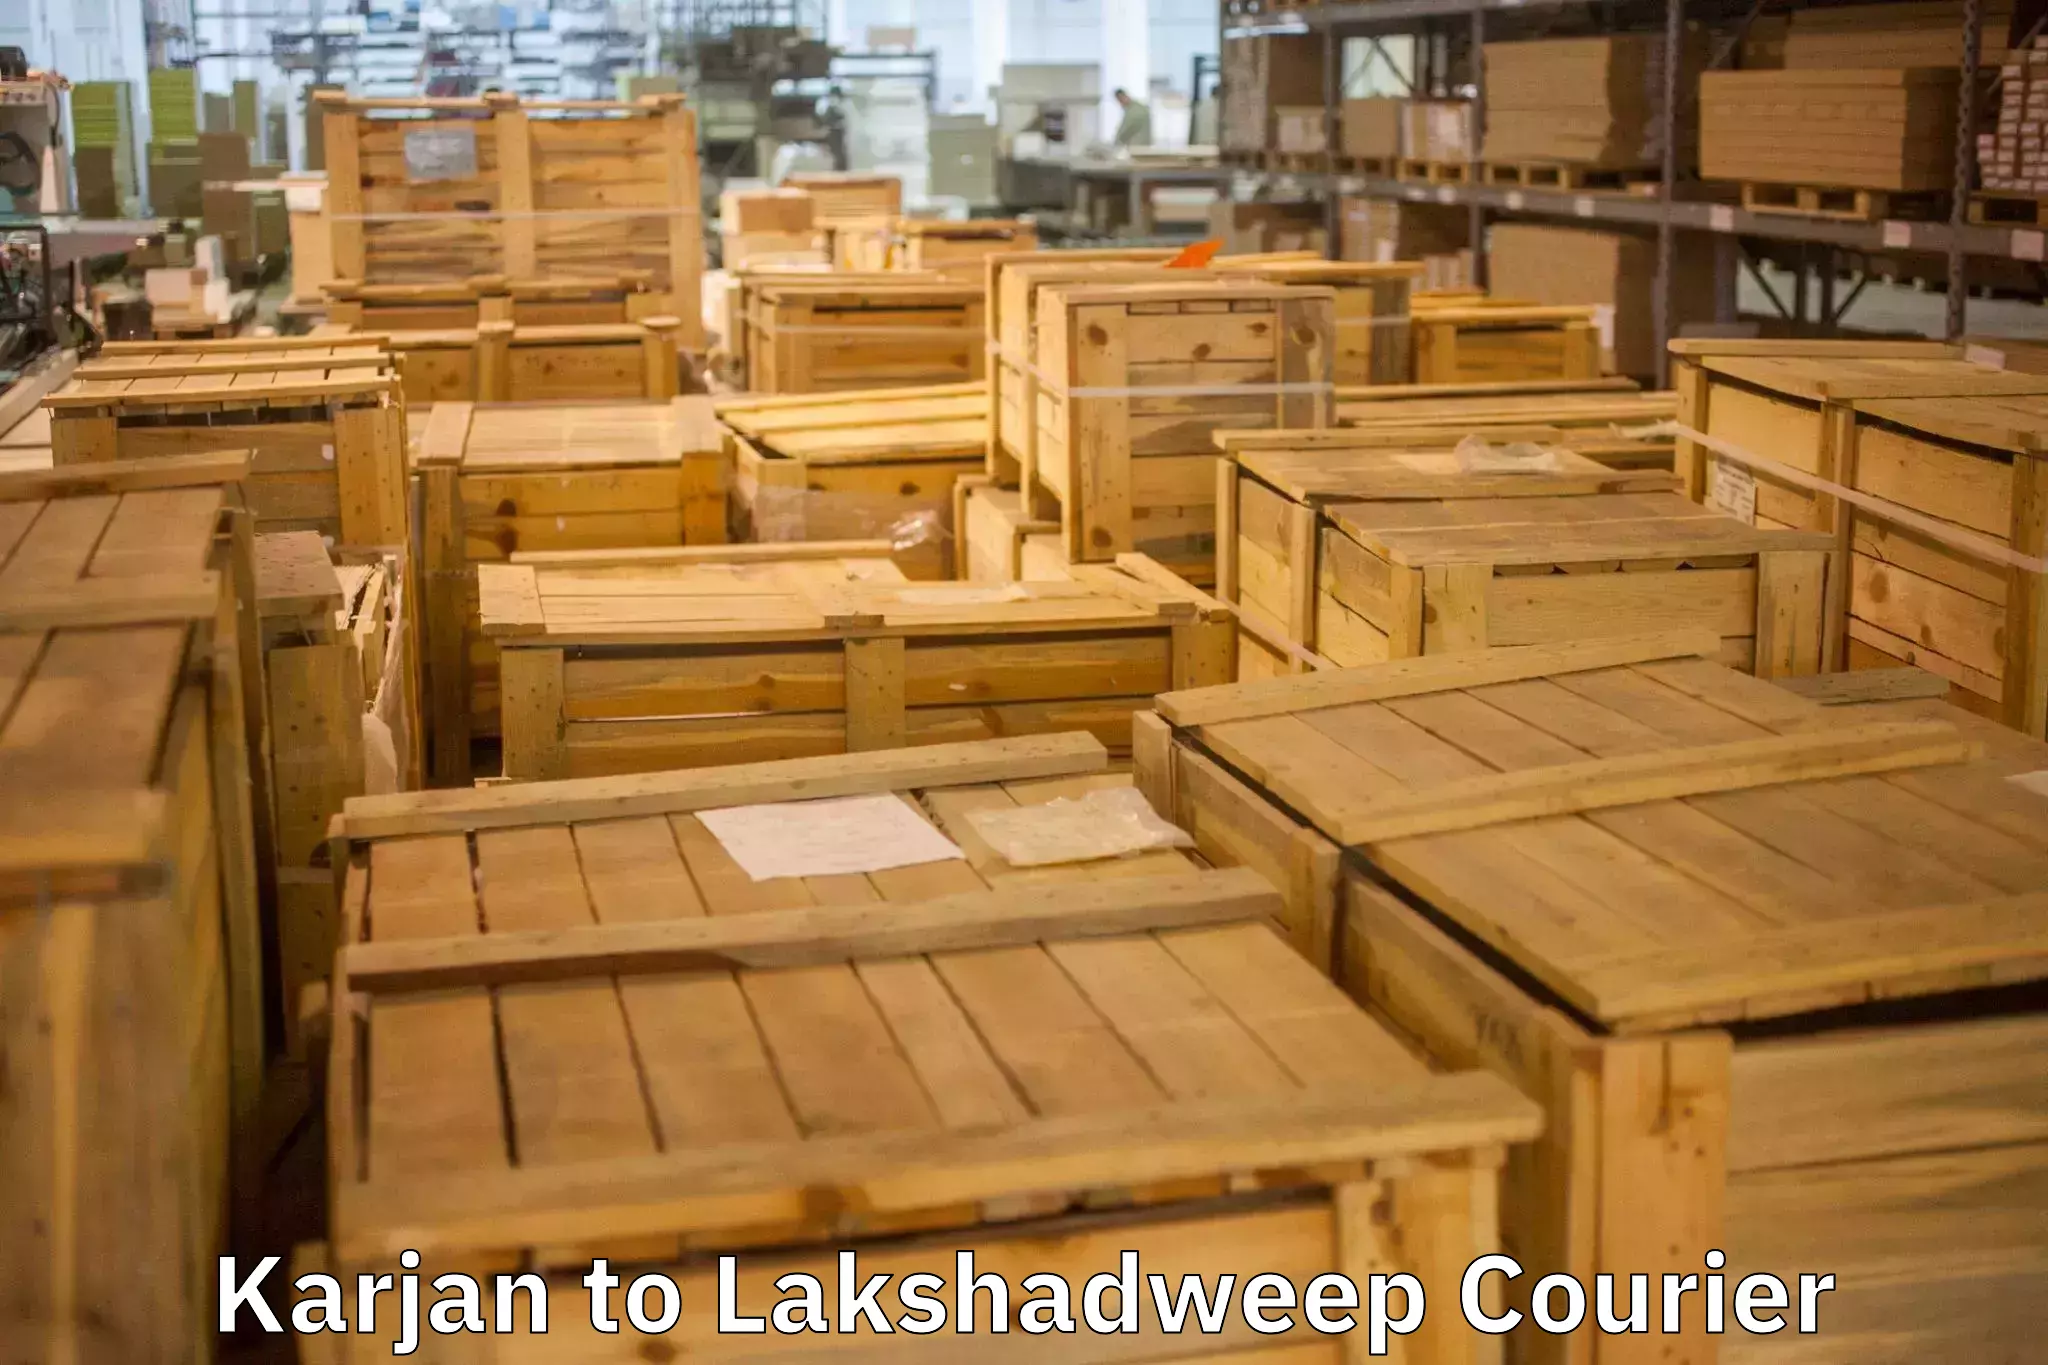 Cost-effective moving options Karjan to Lakshadweep